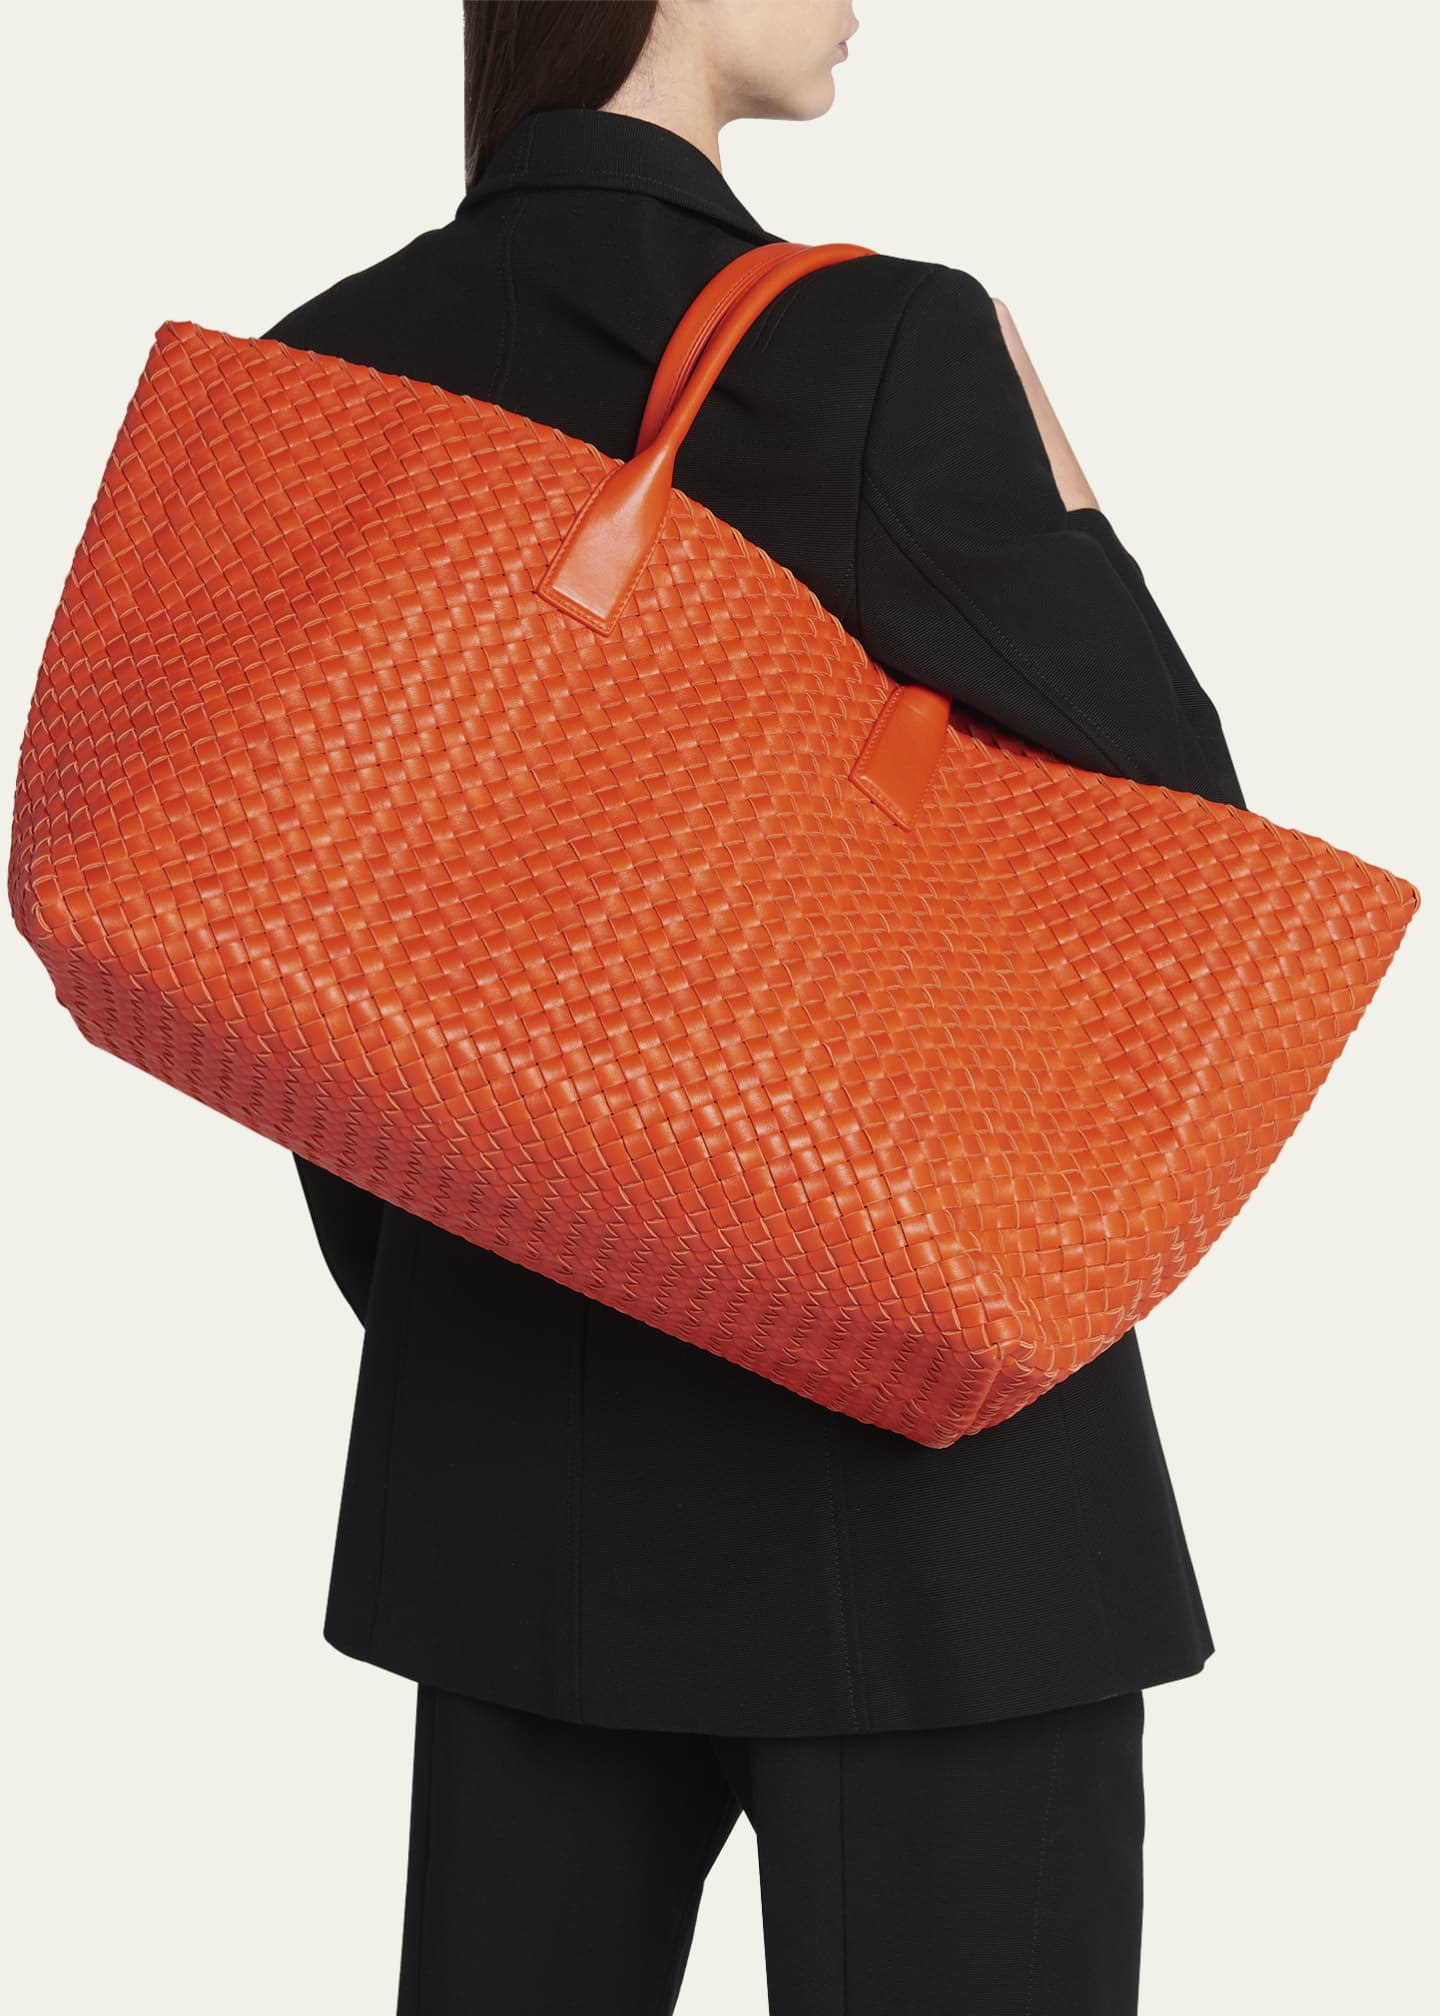 Goyard Handbags At Bergdorf Goodman